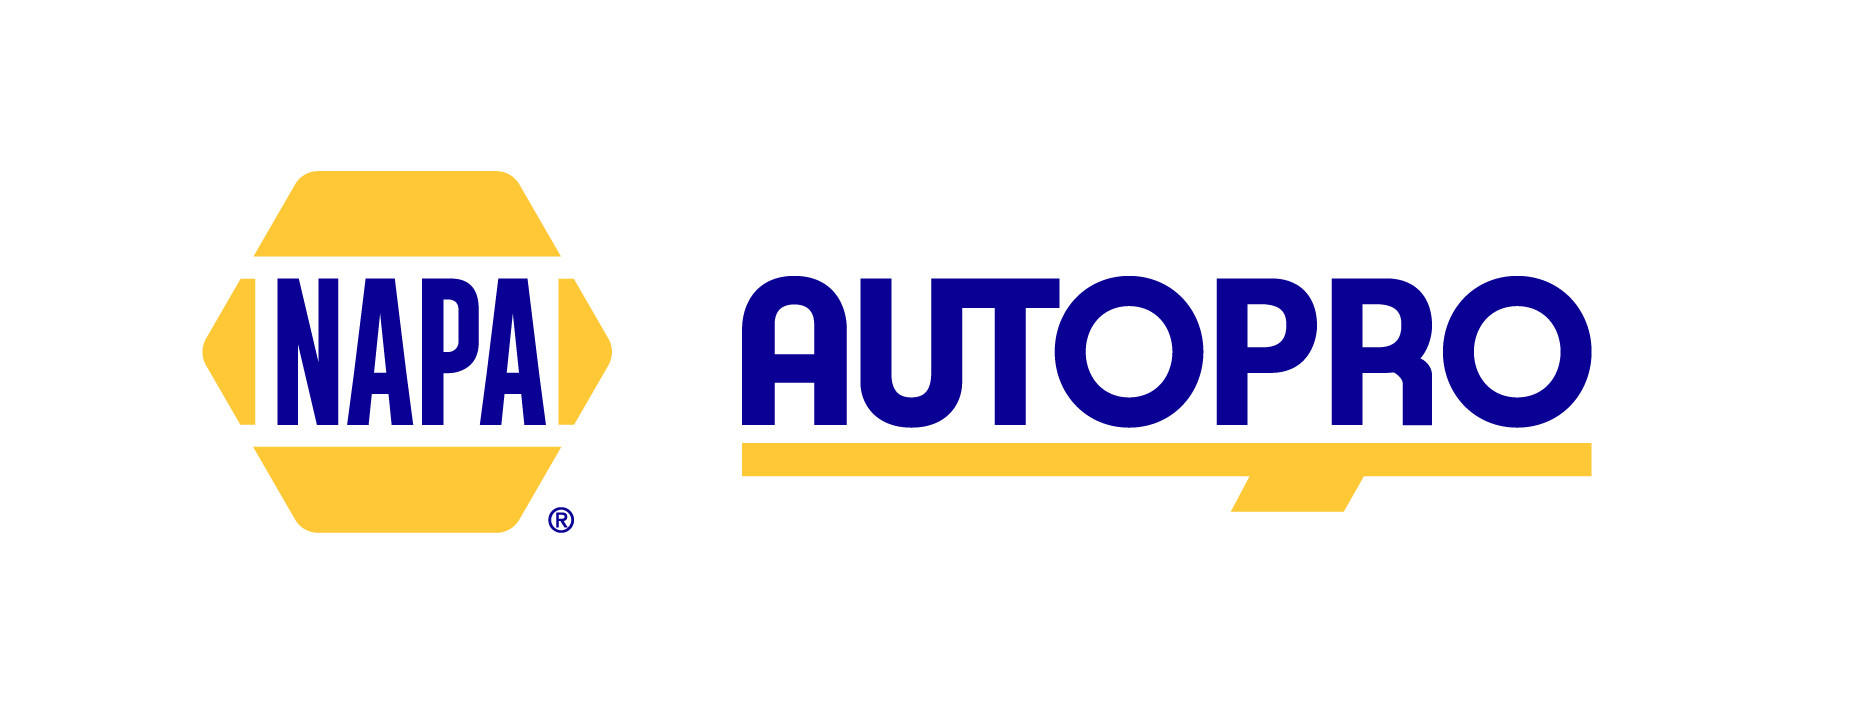 Logo for NAPA AUTOPRO